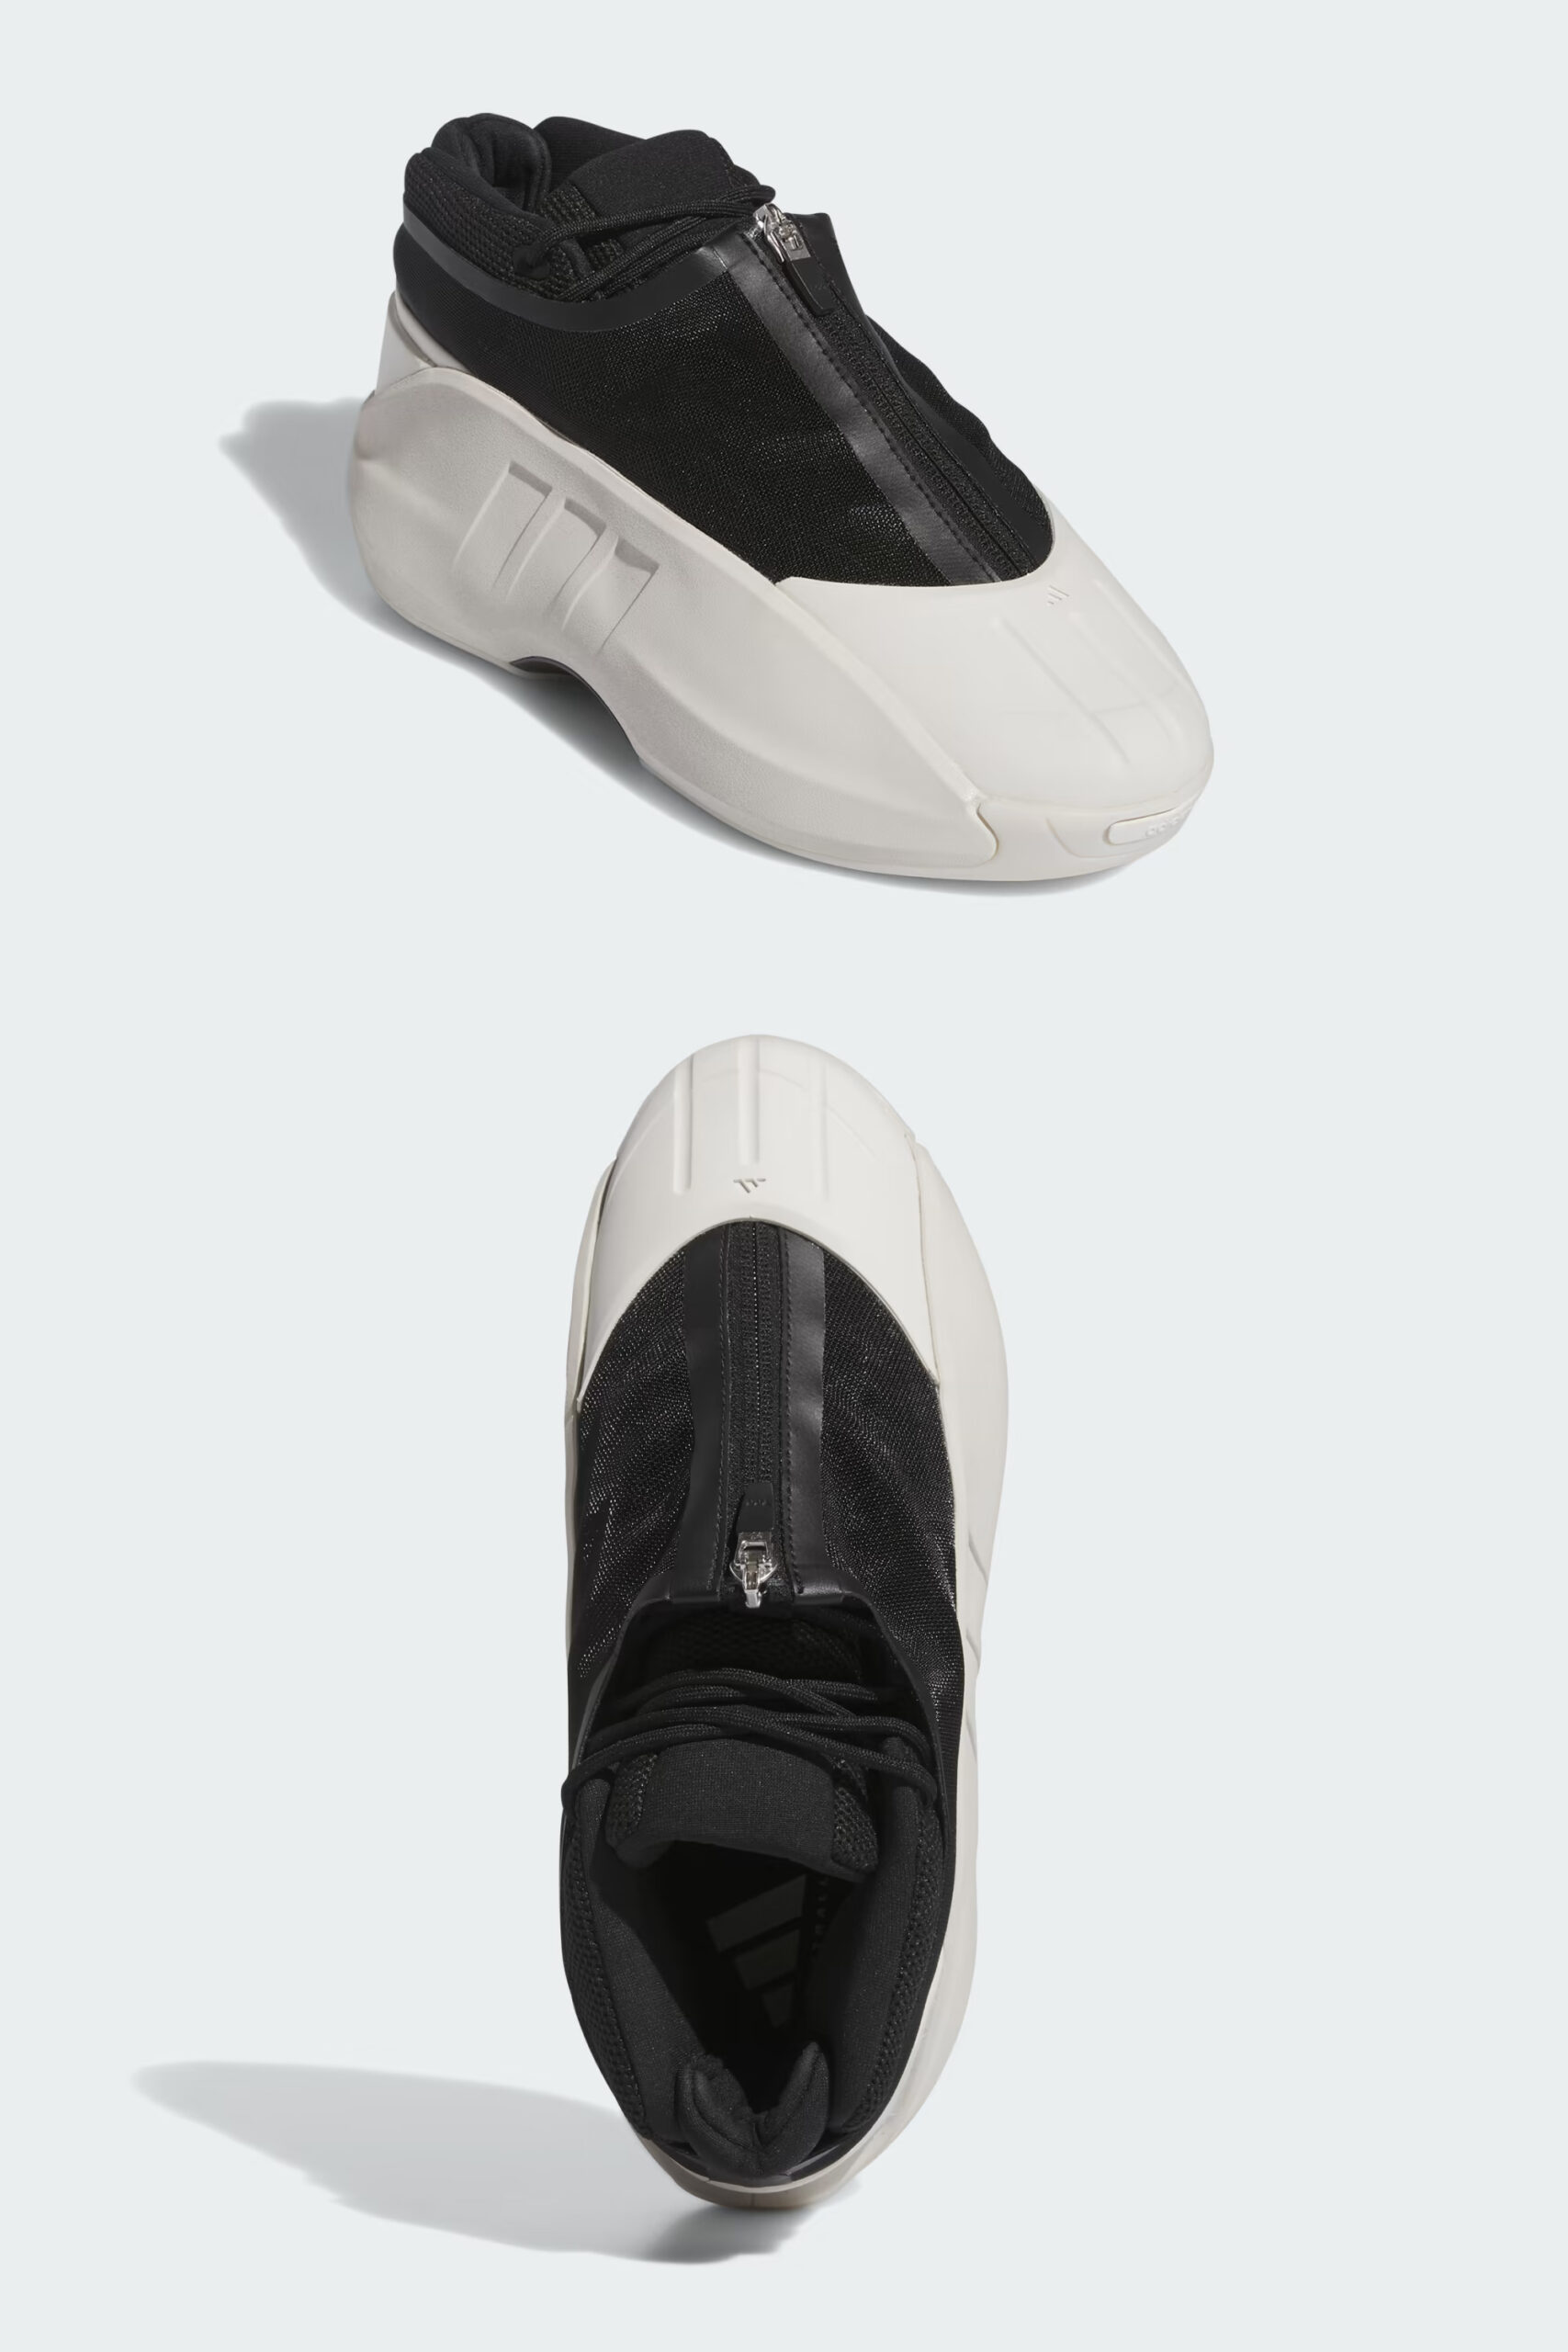 adidas Crazy IIInfinity 003 – Talc | sneakerb0b RELEASES